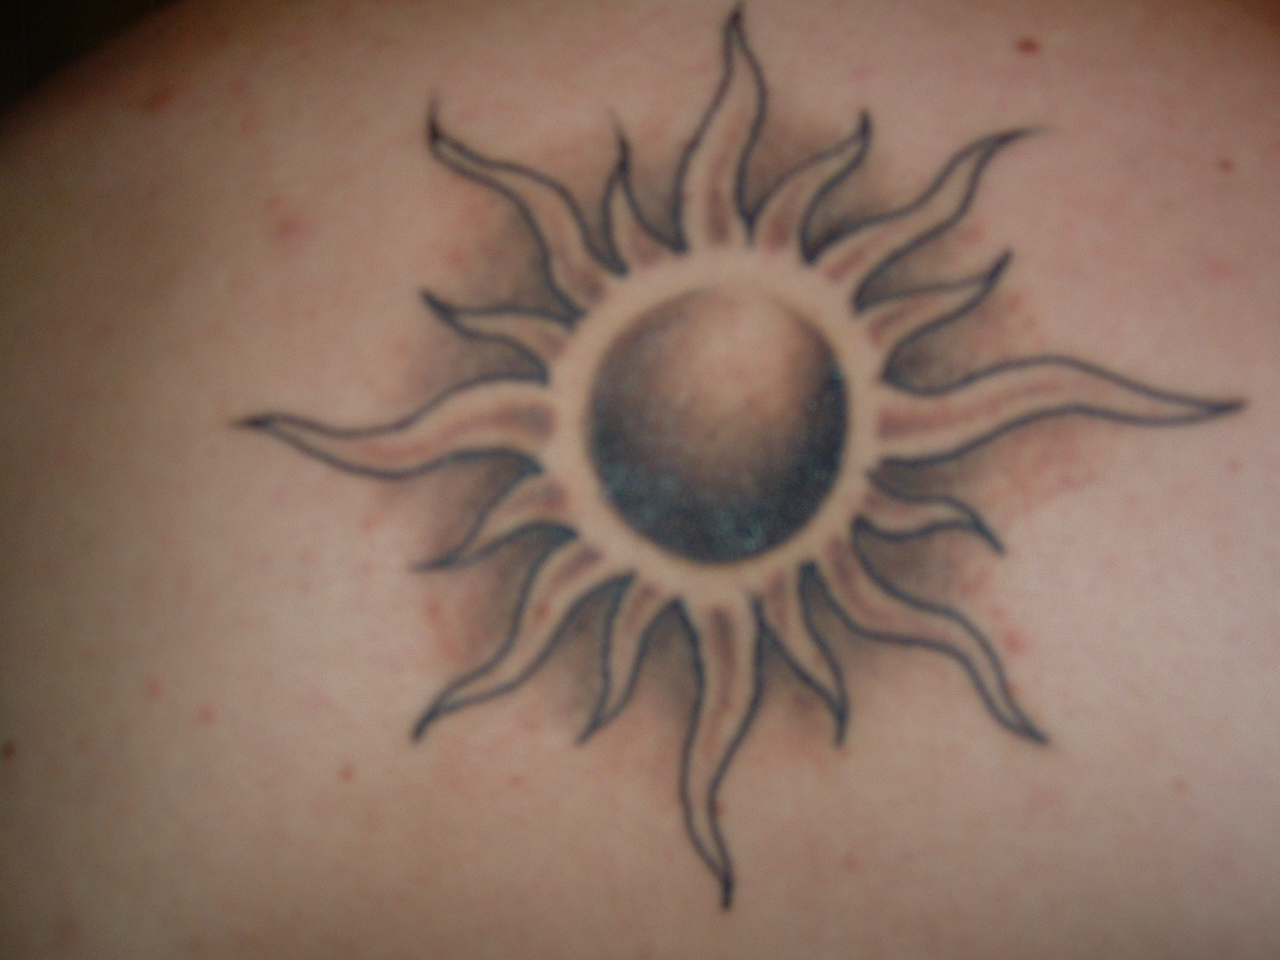 Artistic-black-sun-tattoo-on-arm.jpg